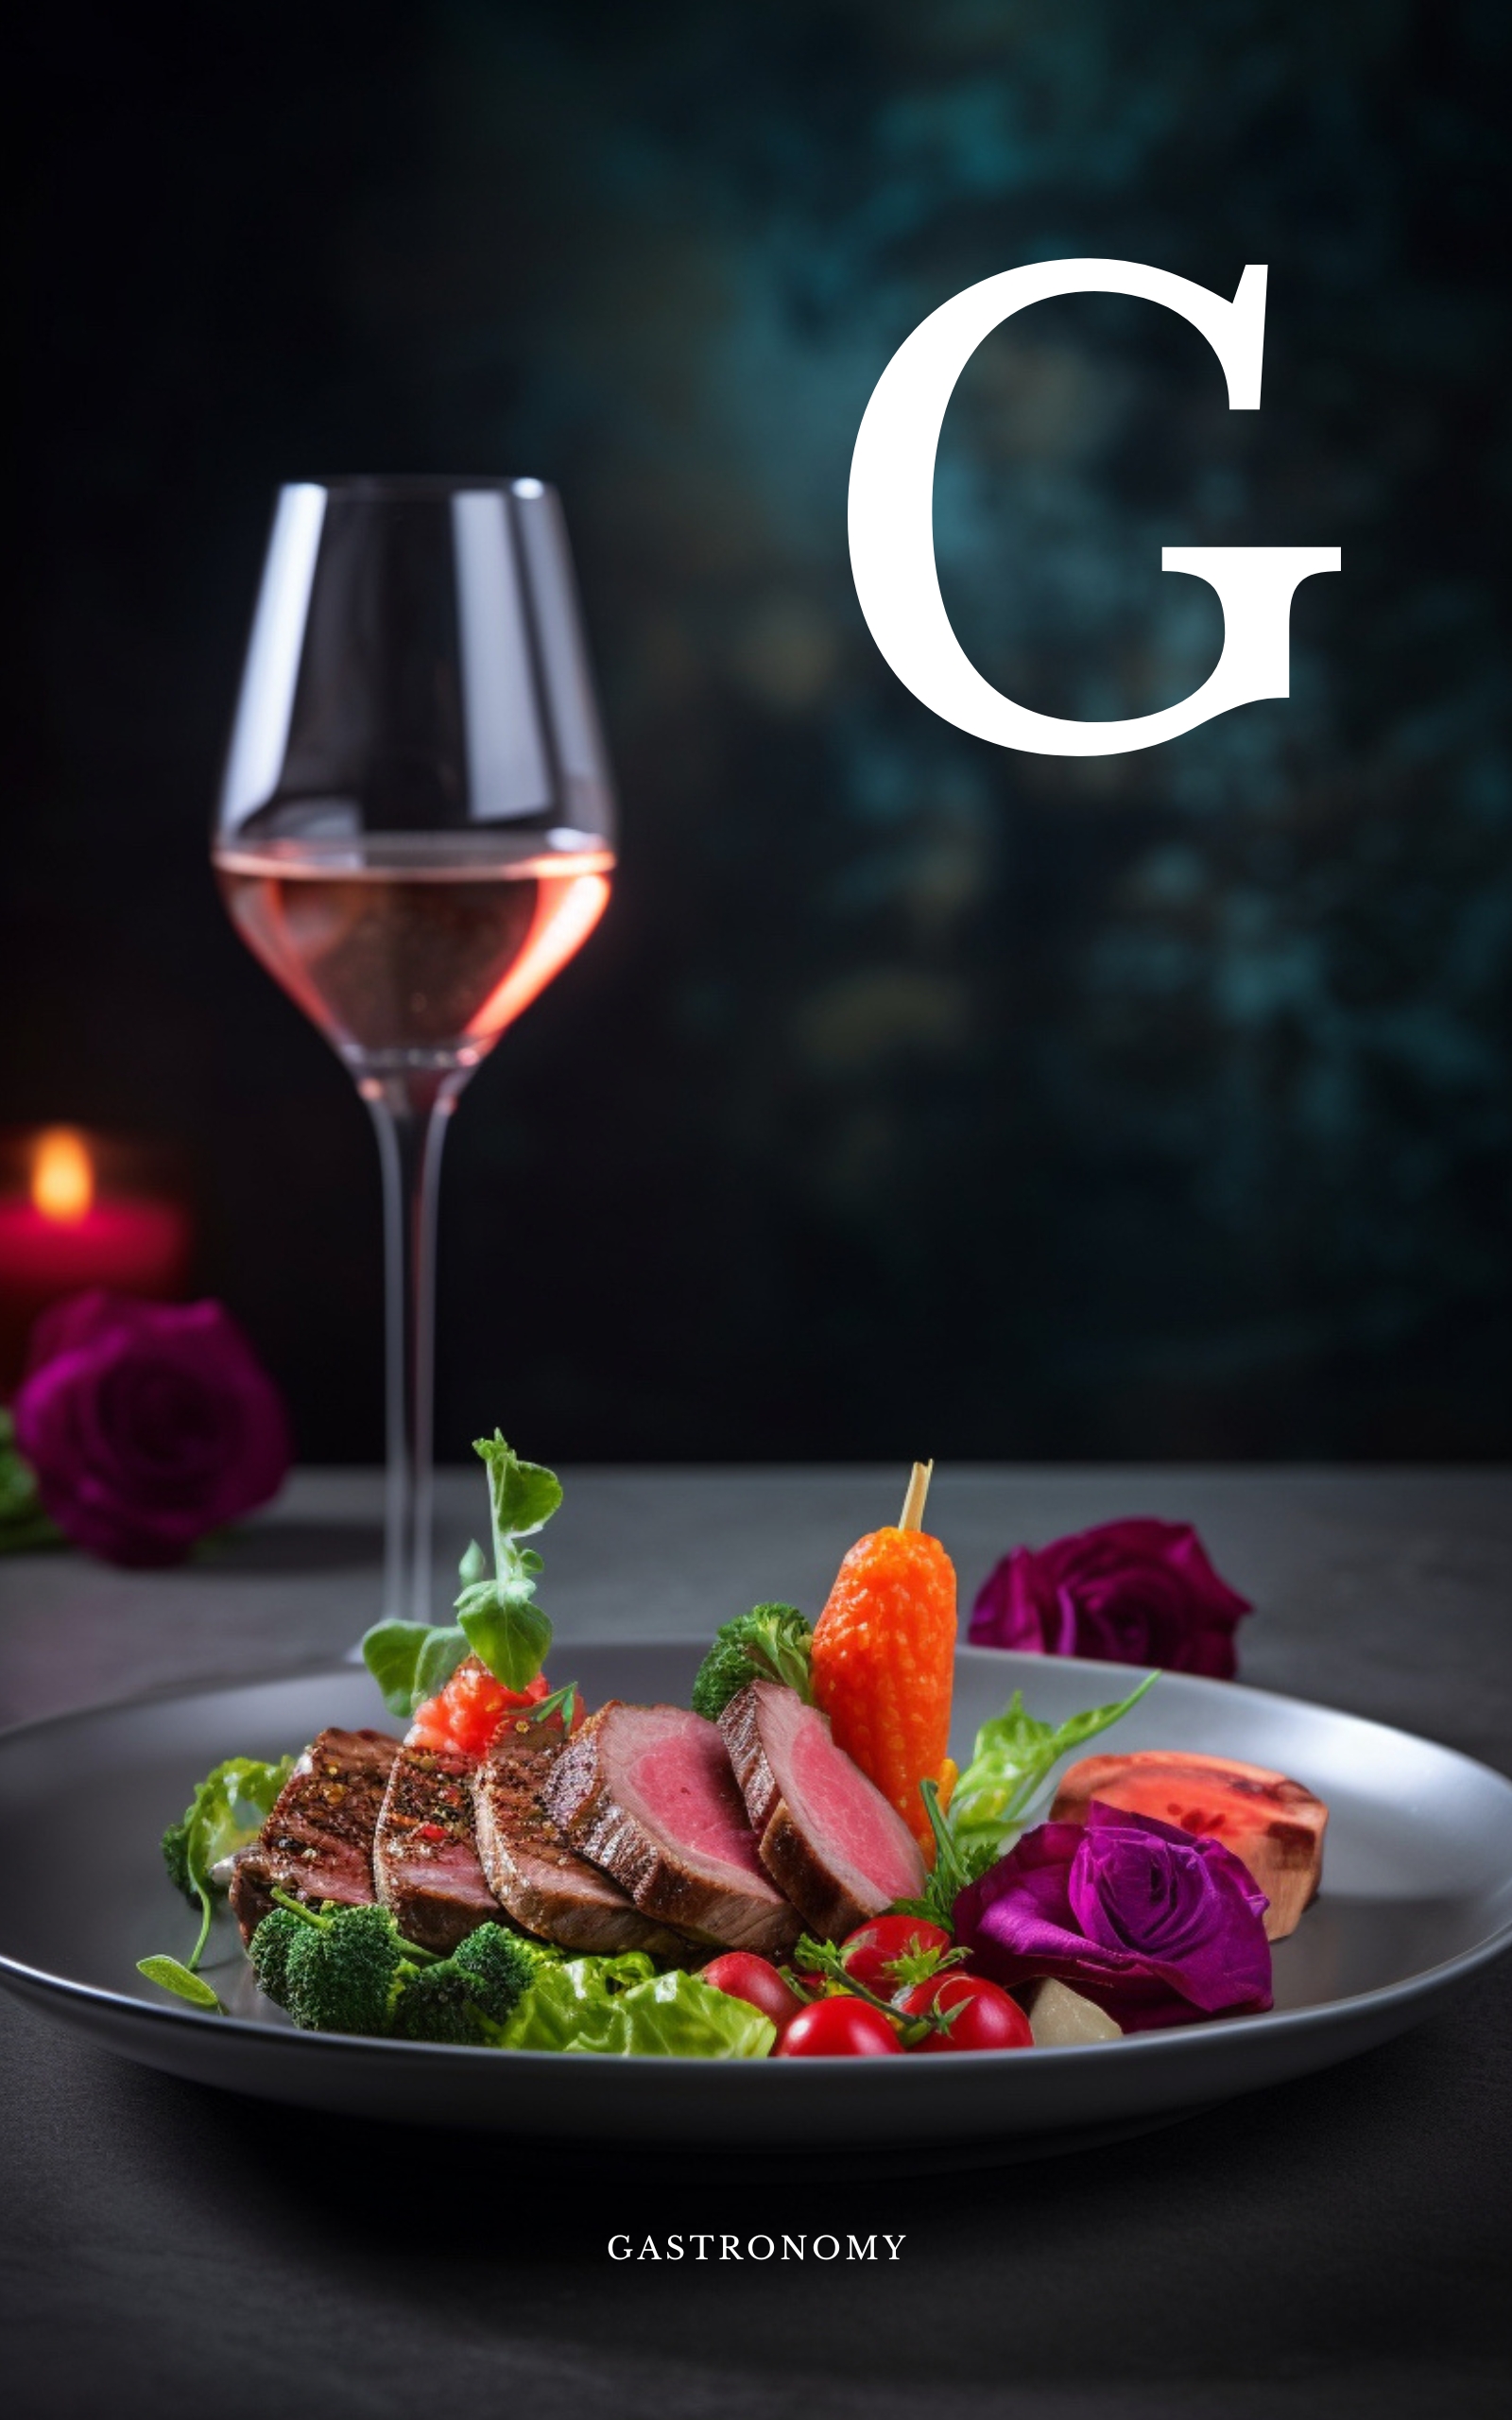 G for Gastronomy